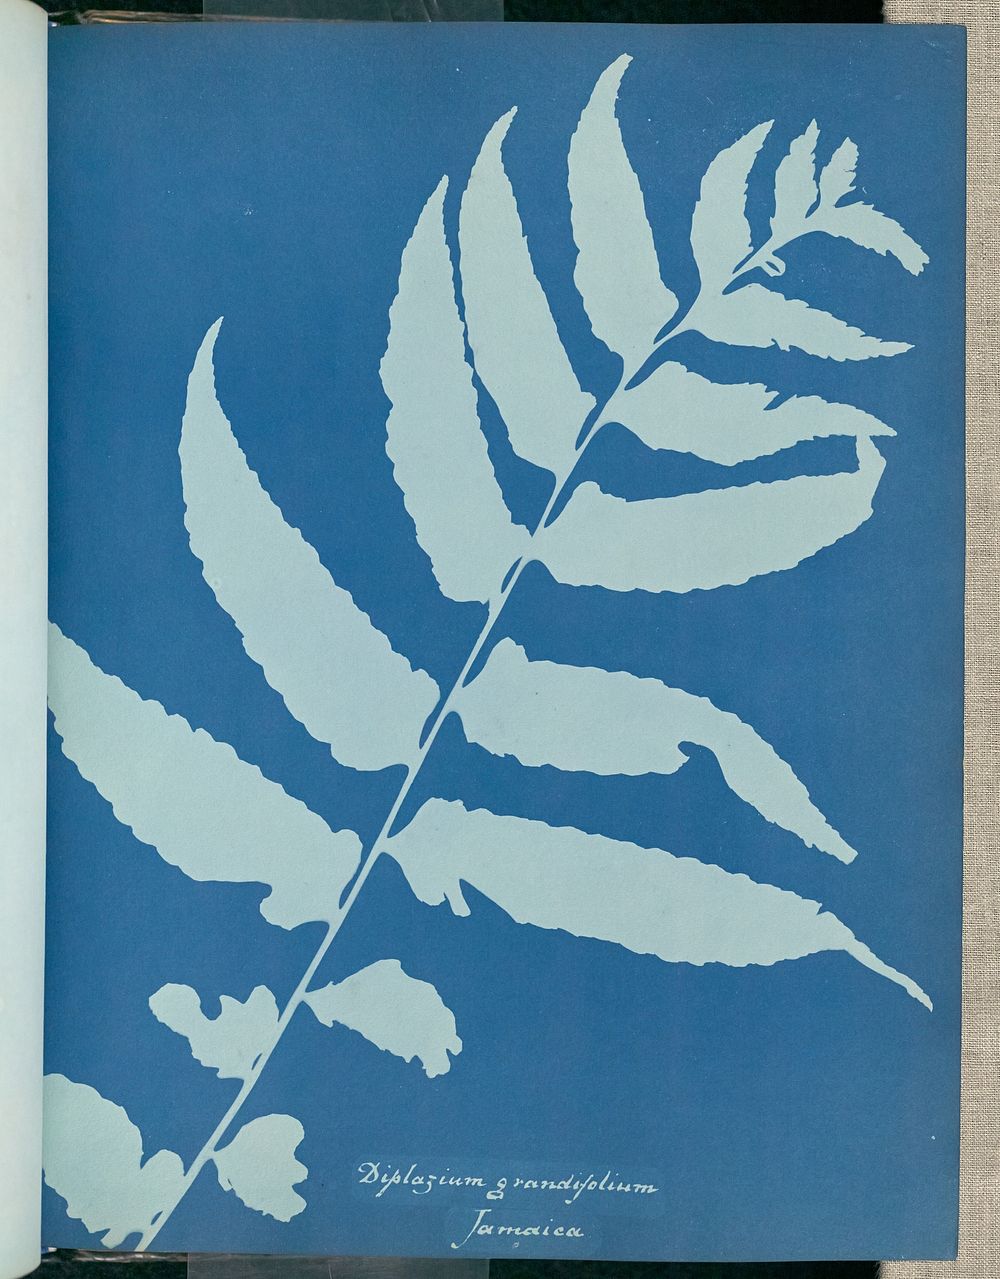 Diplazium grandifolium, Jamaica by Anna Atkins and Anne Dixon